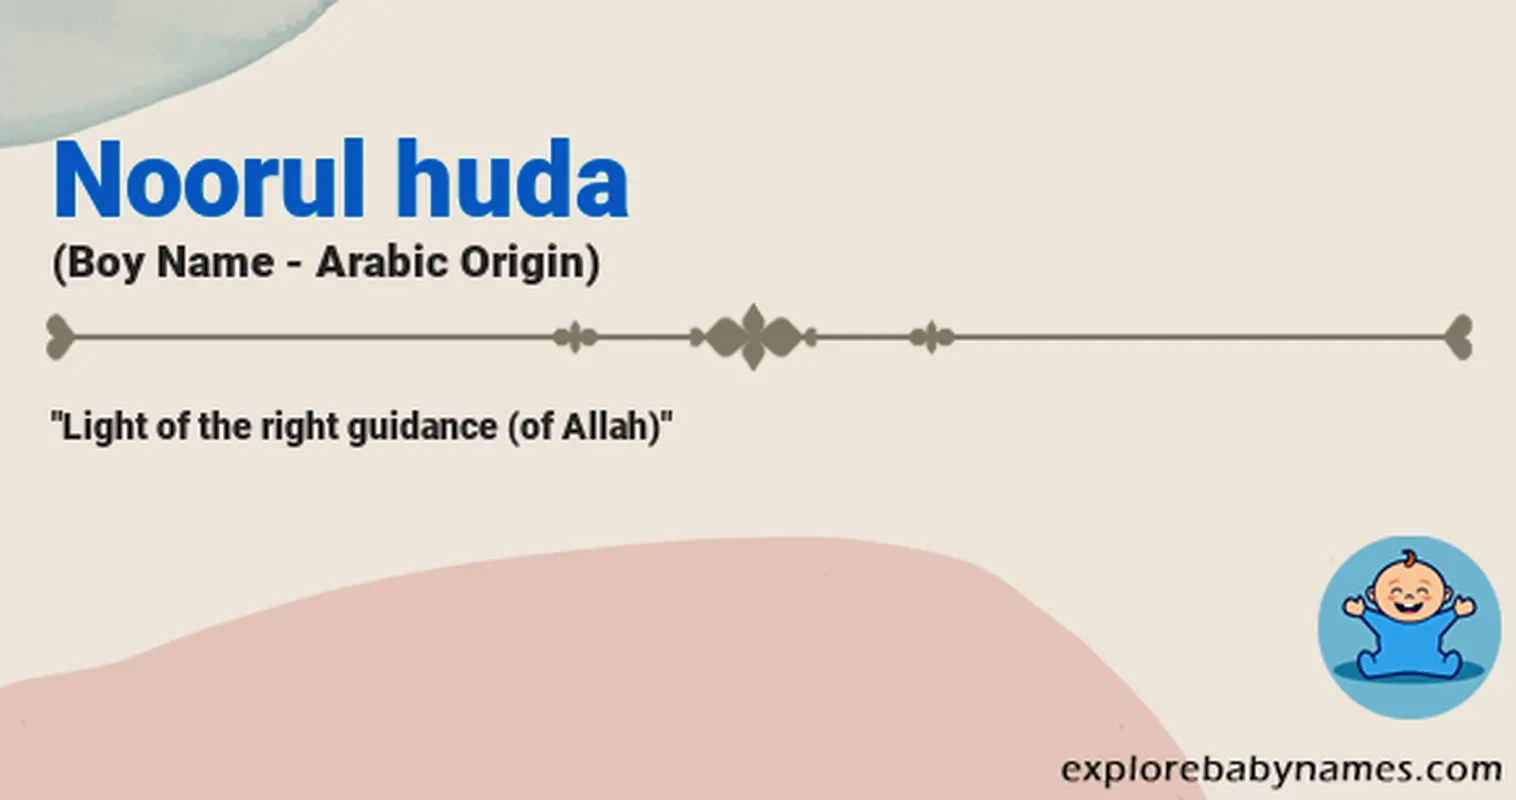 Meaning of Noorul huda